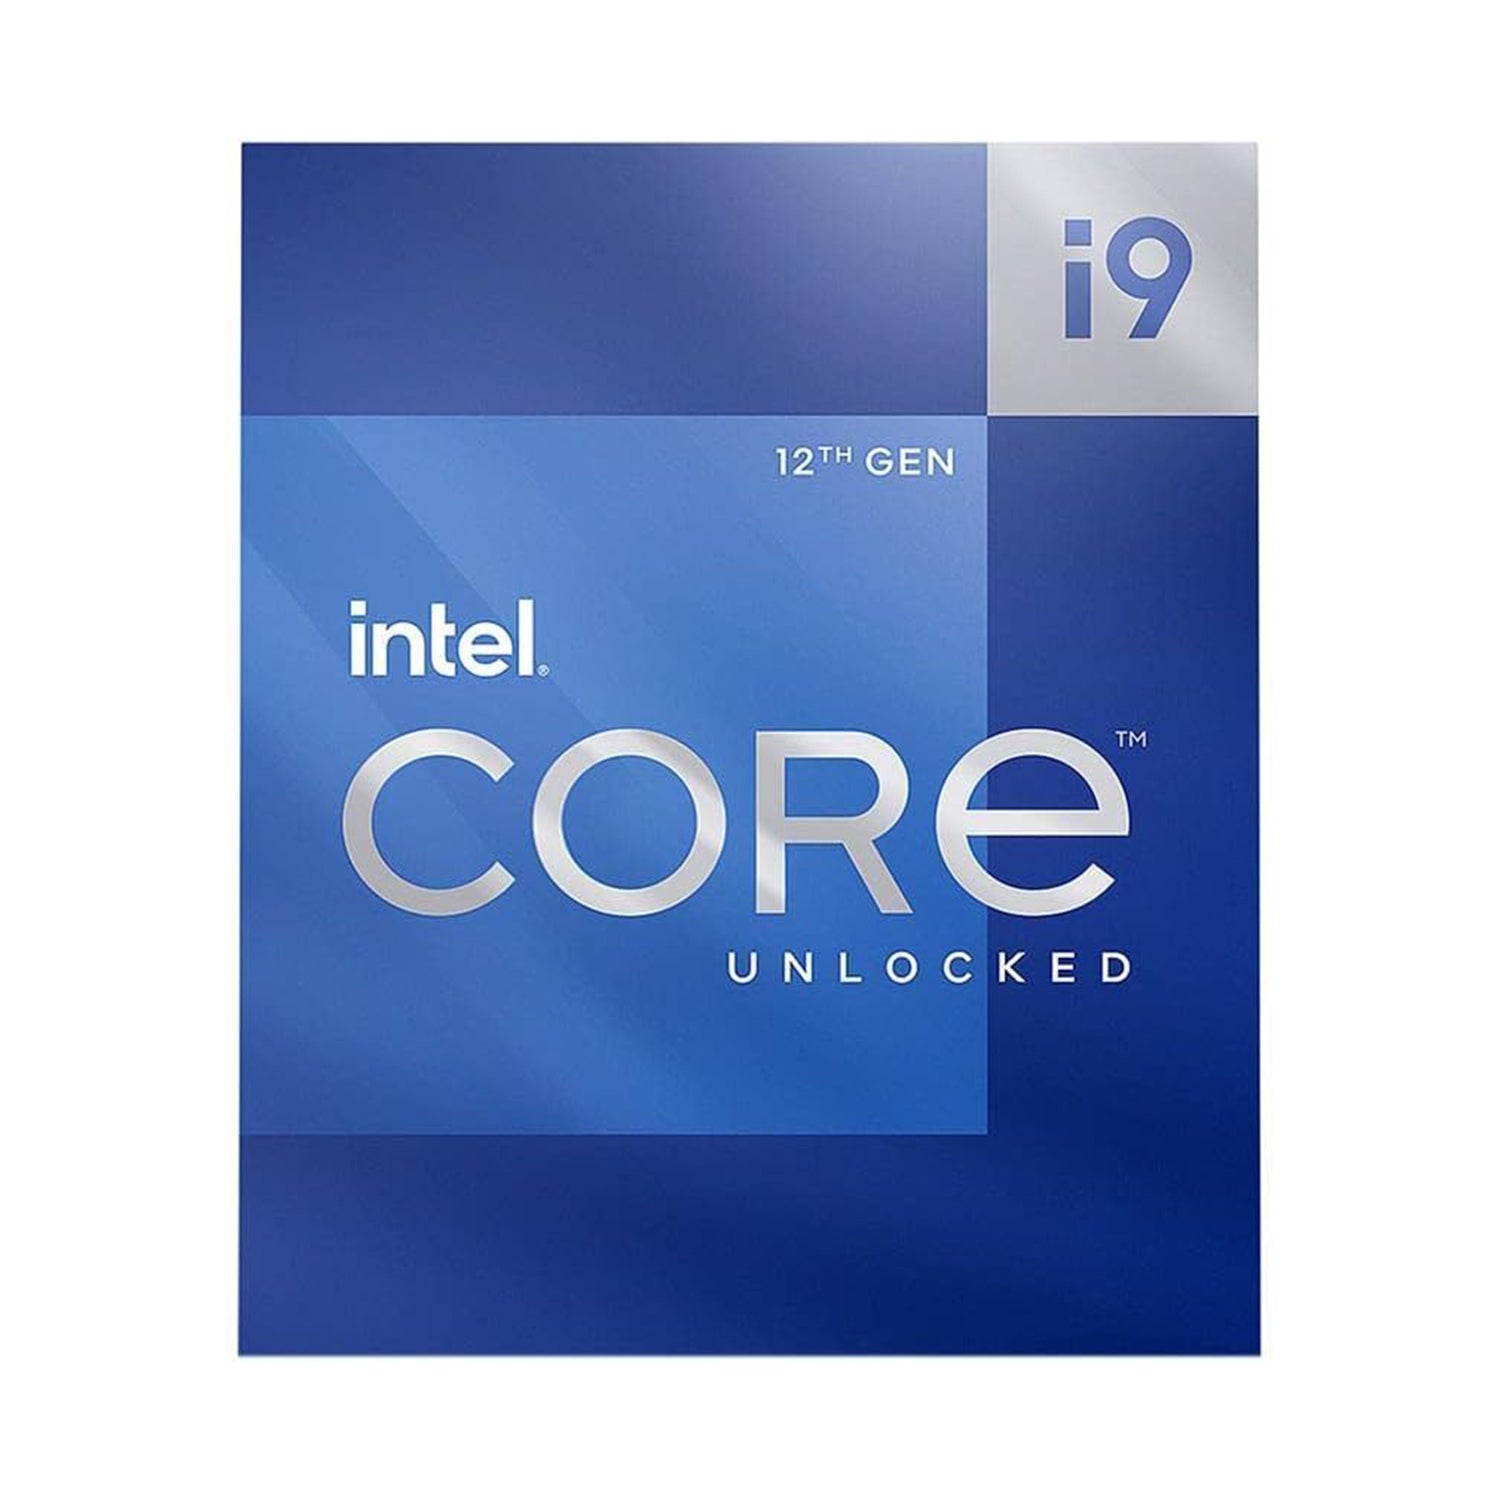 Intel Core i9-12900K Processor - Core i9 12th Gen Alder Lake 16 Core(8P+8E) 24 Threads up to 5.20 GHz LGA 1700, 30 MB Intel Smart Cache, 125W Desktop Processor - BX8071512900K